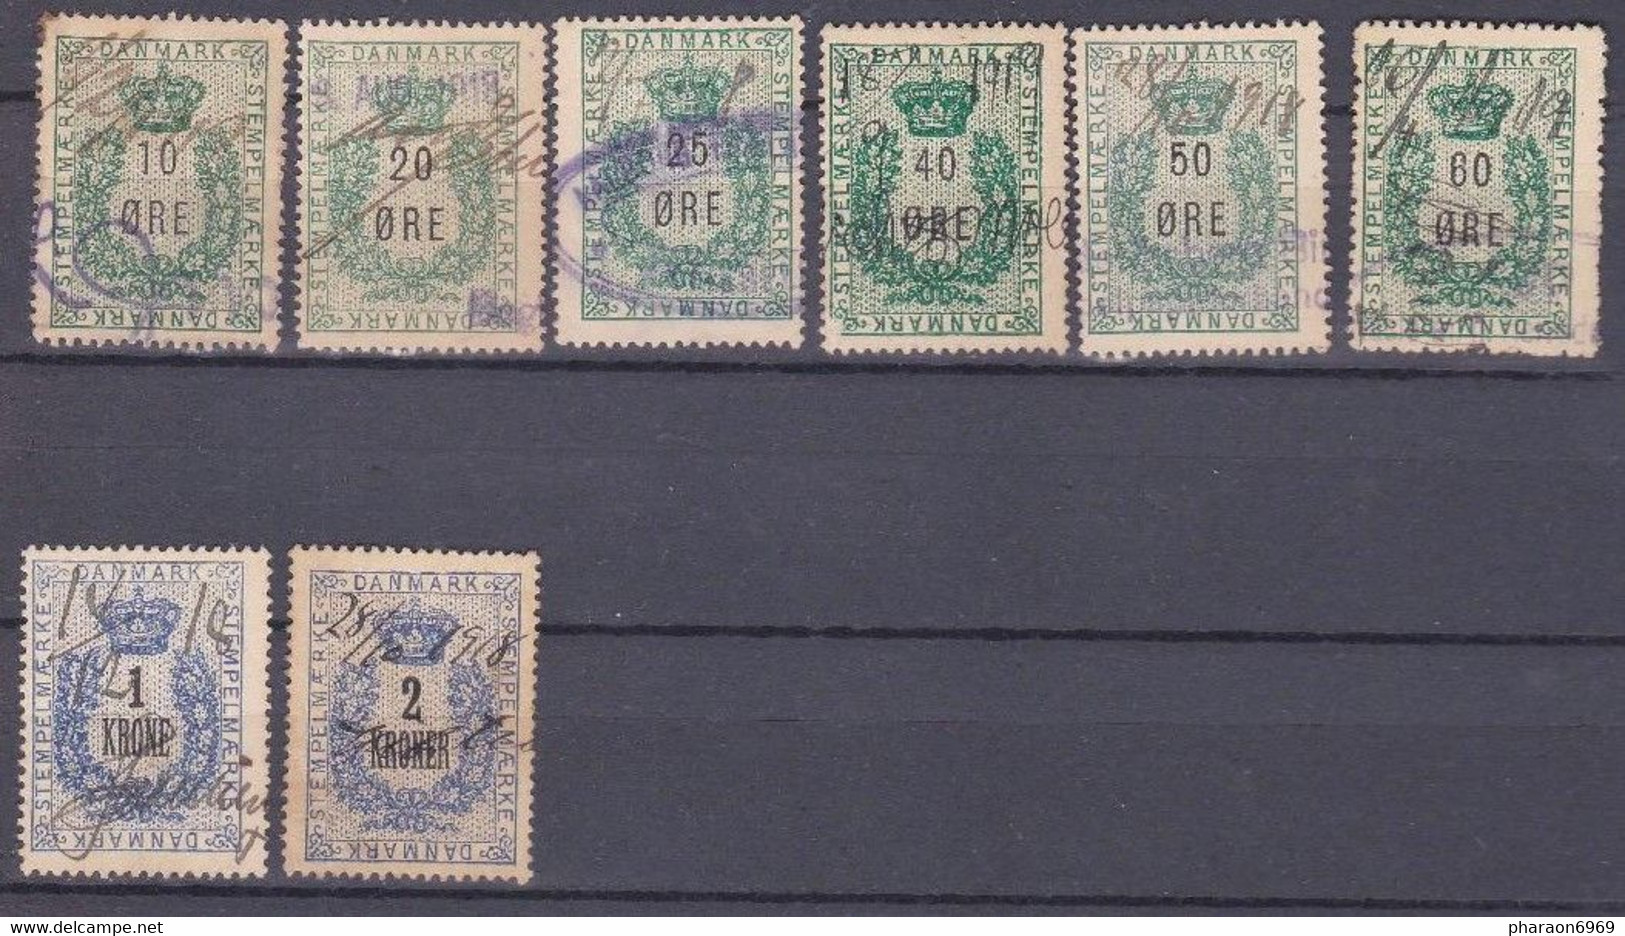 Stempel Maerke - Revenue Stamps